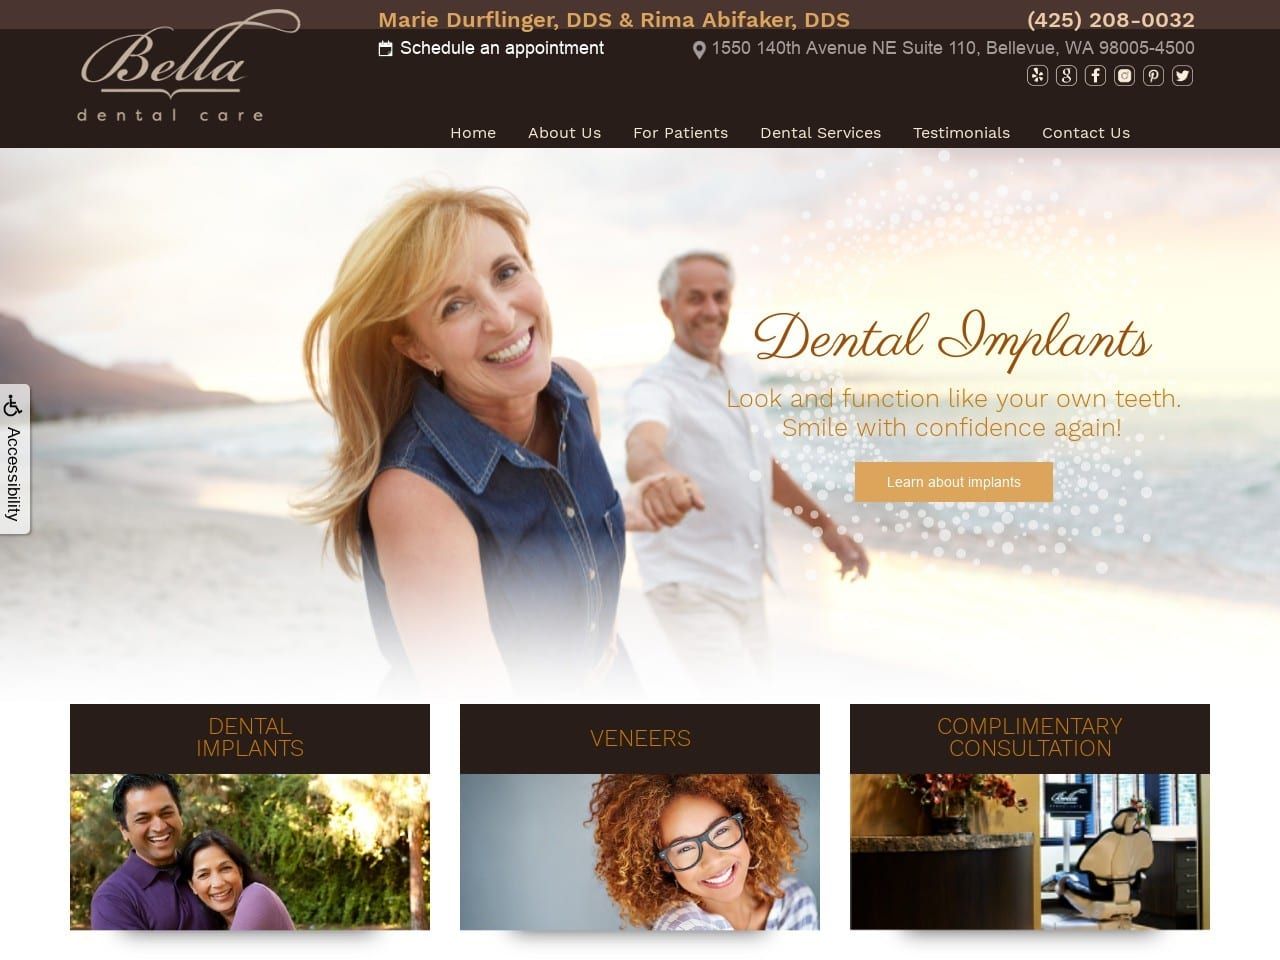 Bella Dental Care Website Screenshot from belladentalcare.net